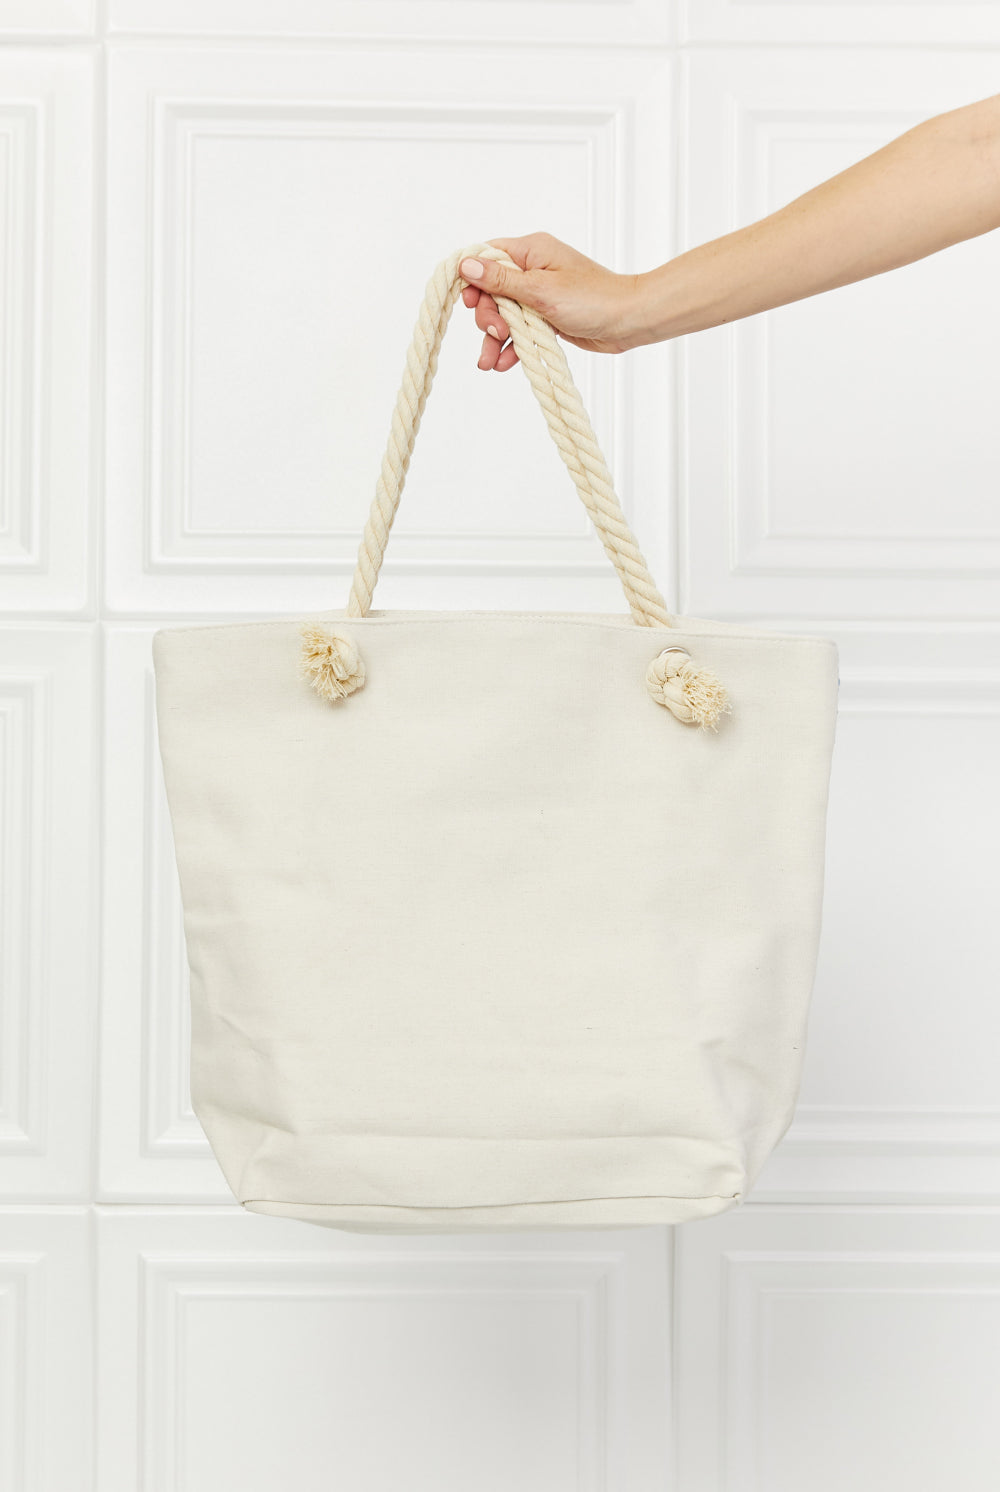 Antique White Justin Taylor Picnic Date Tassle Tote Bag Handbags